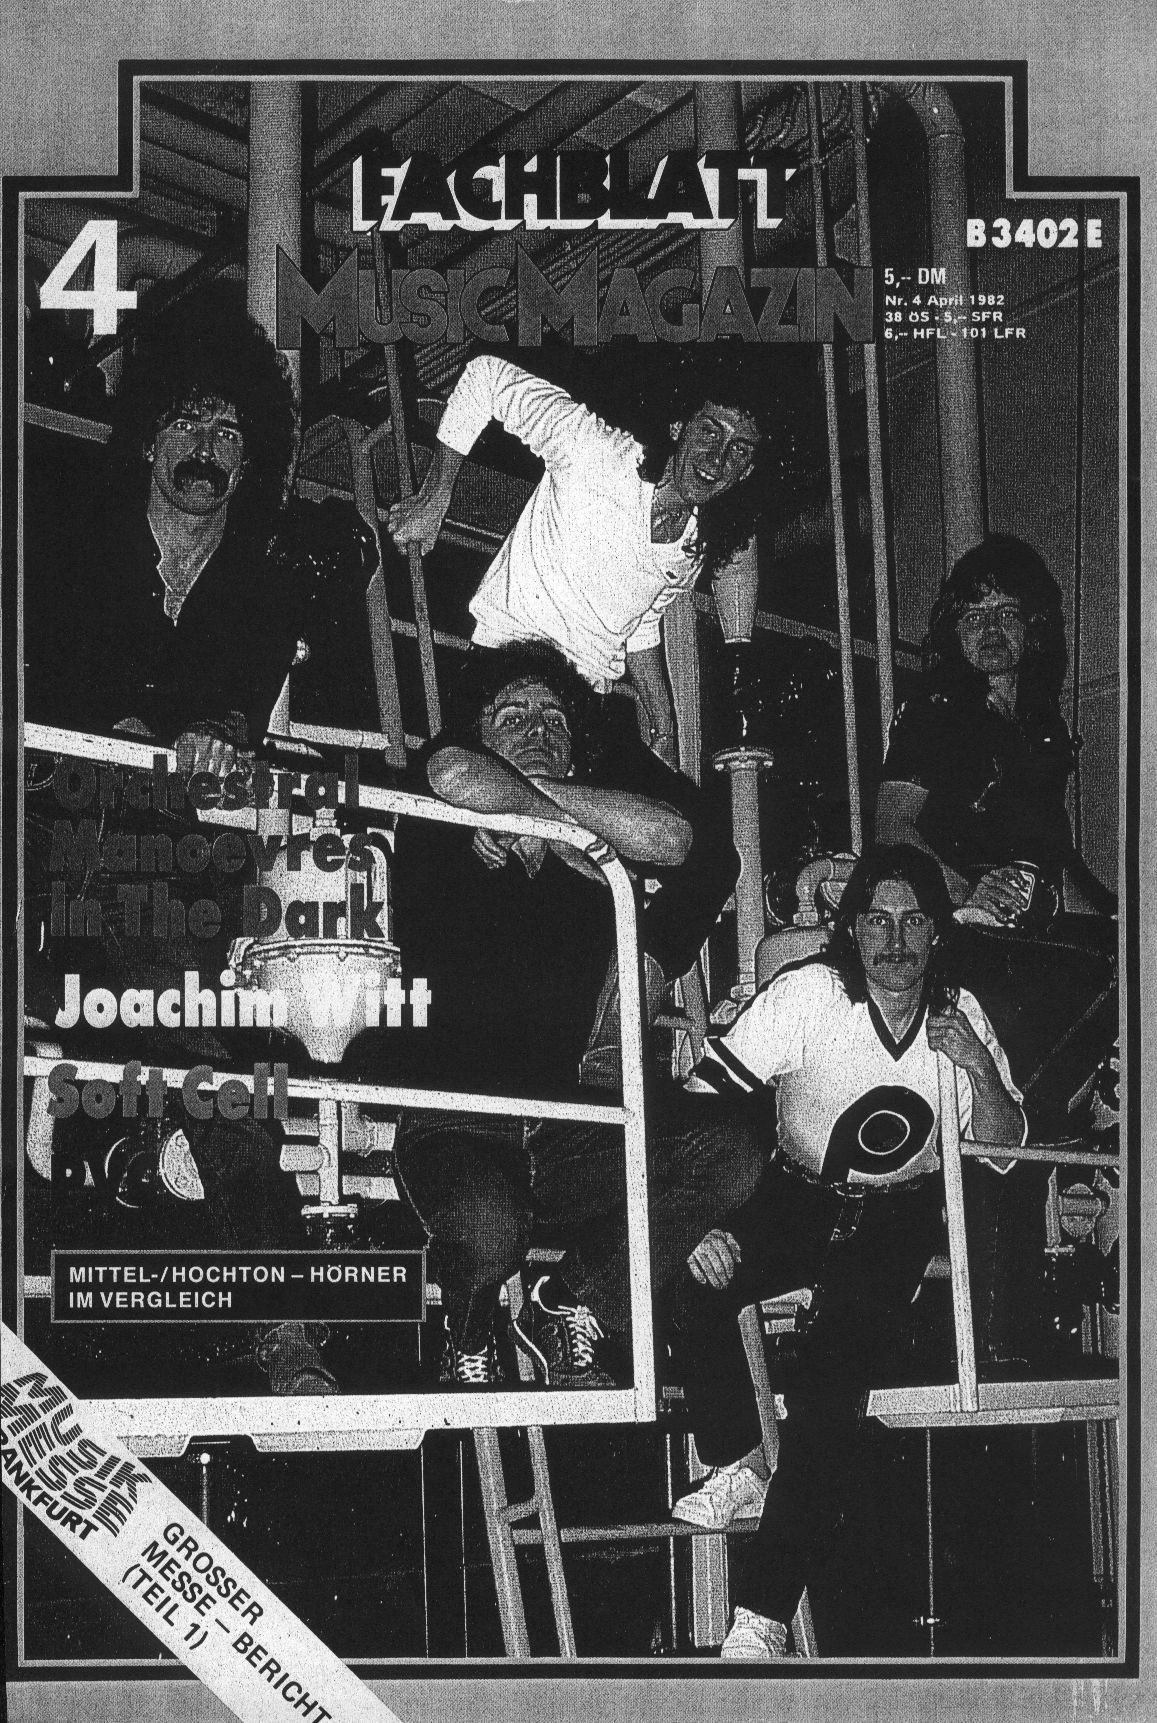 1982musikmagazin0001